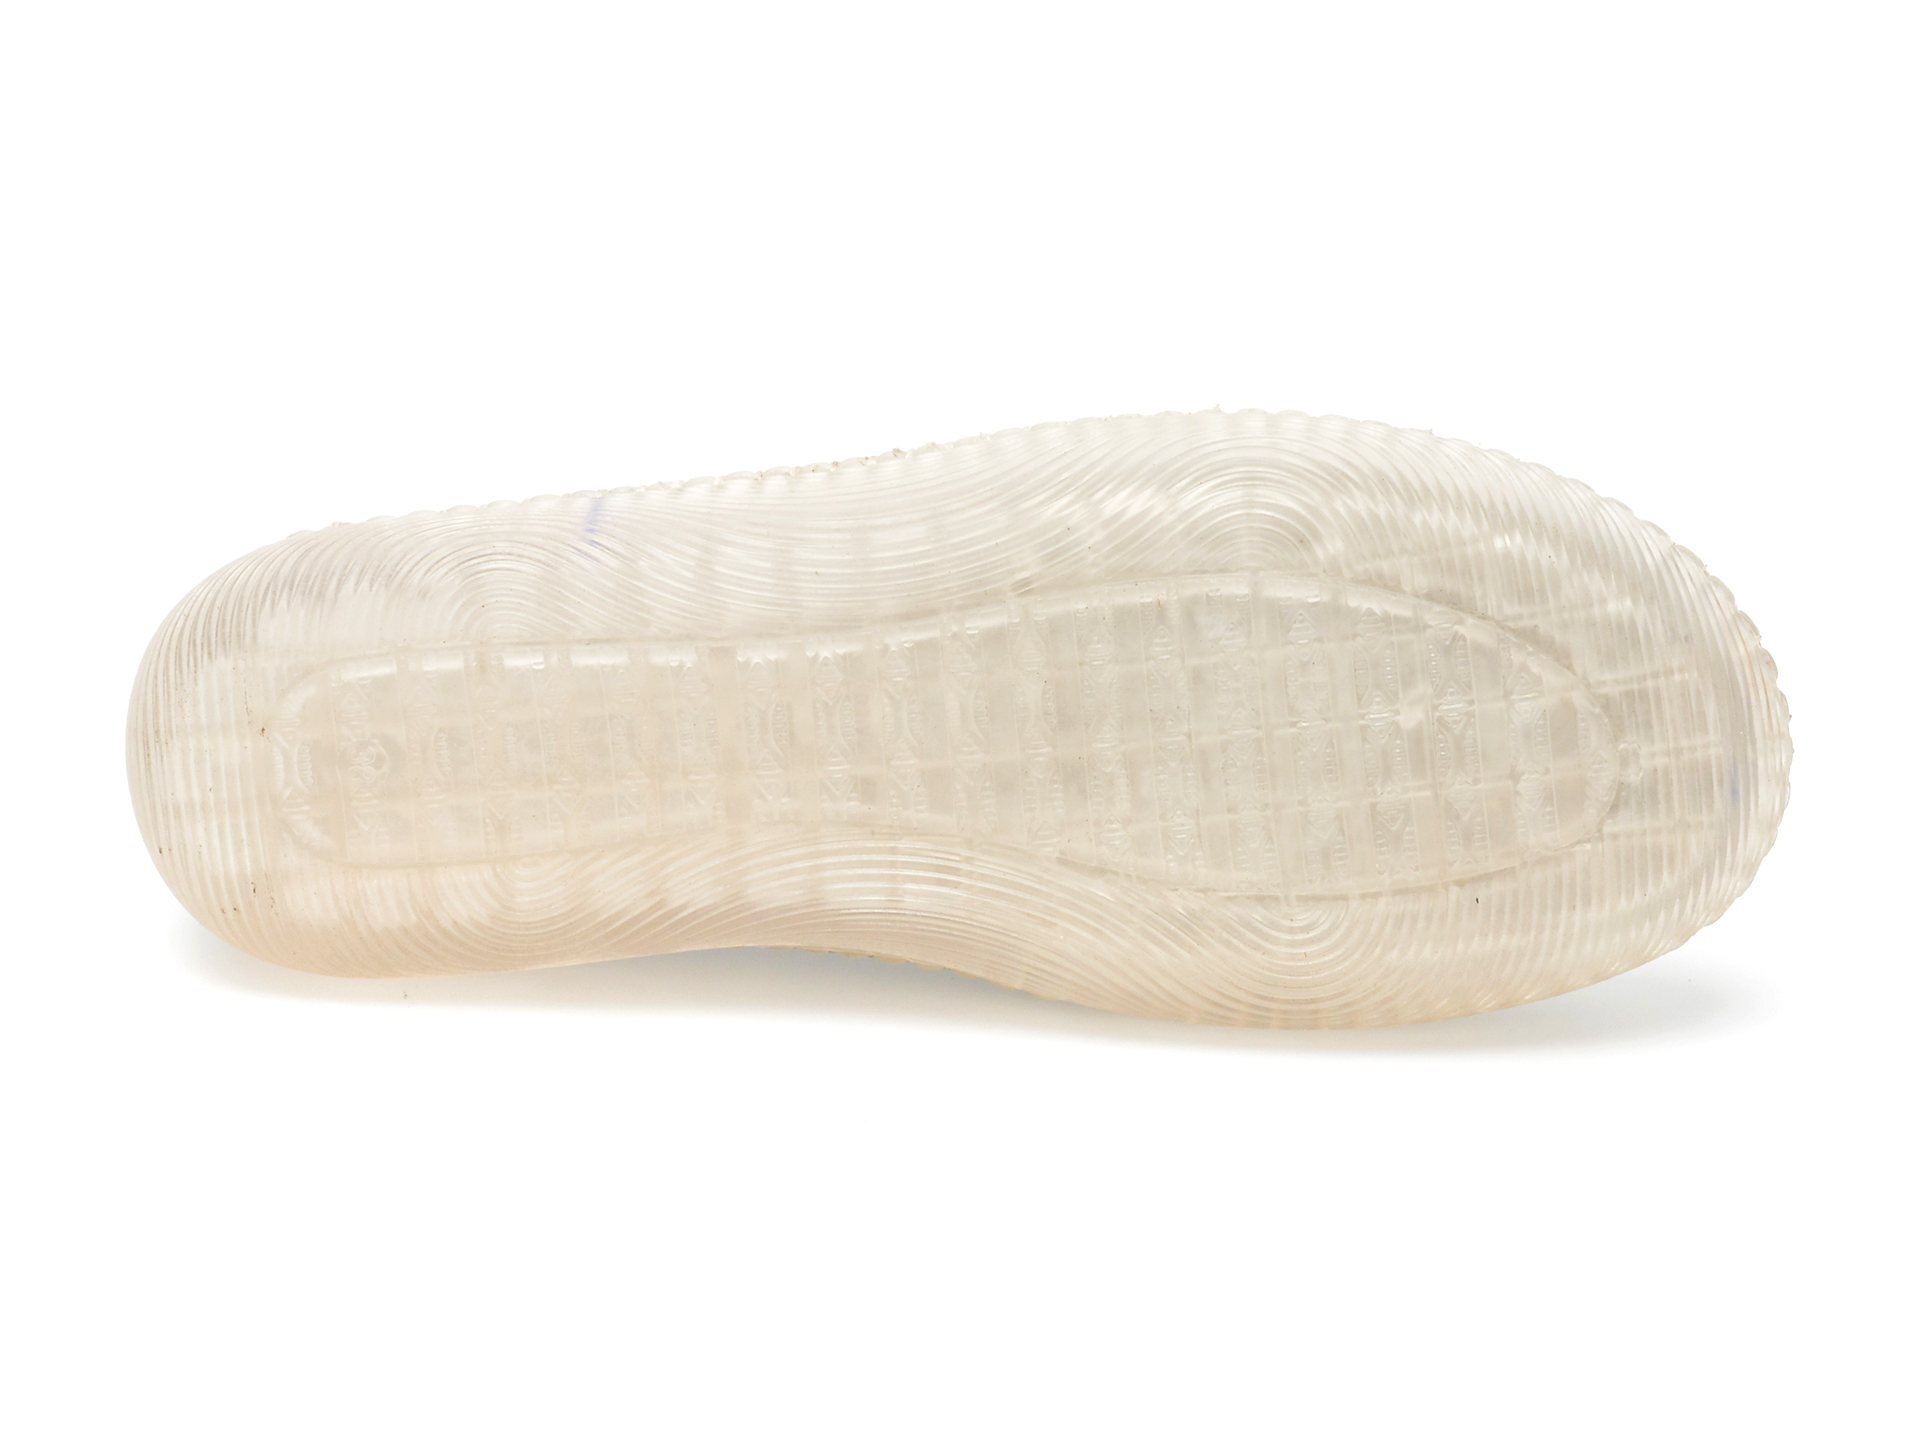 Pantofi IMAGE albi, 22110, din piele naturala